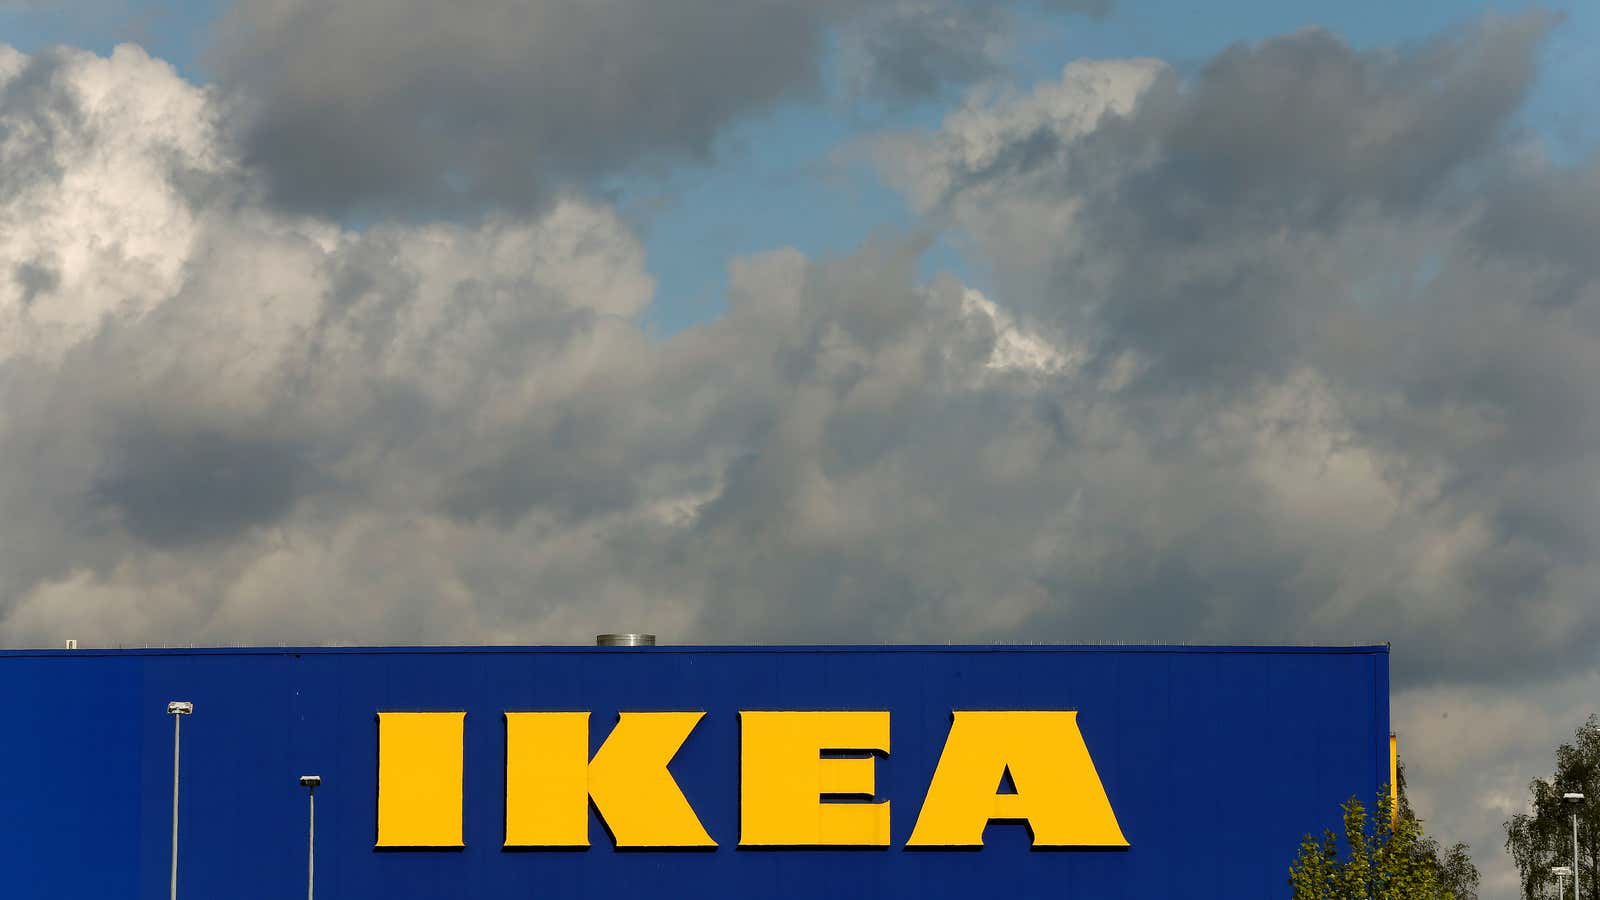 IKEA is here.